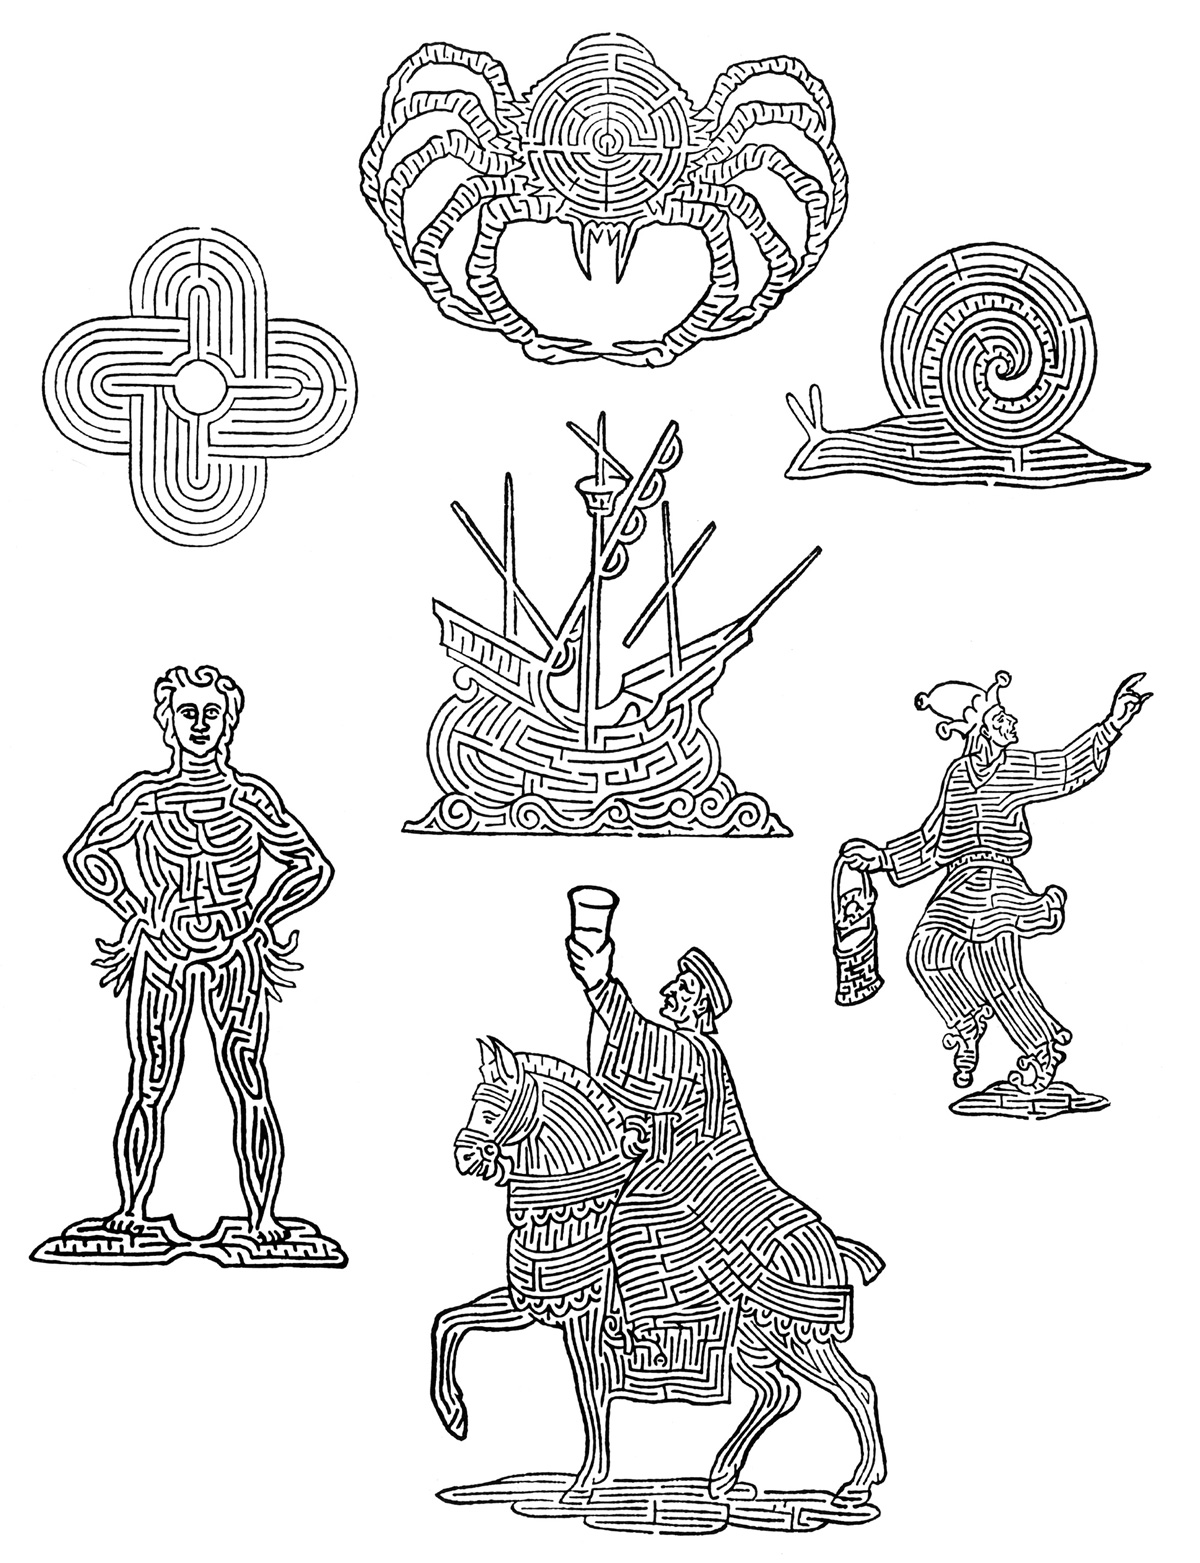 Seven mazeform woodcuts from Paduan architect Francesco Segala’s 